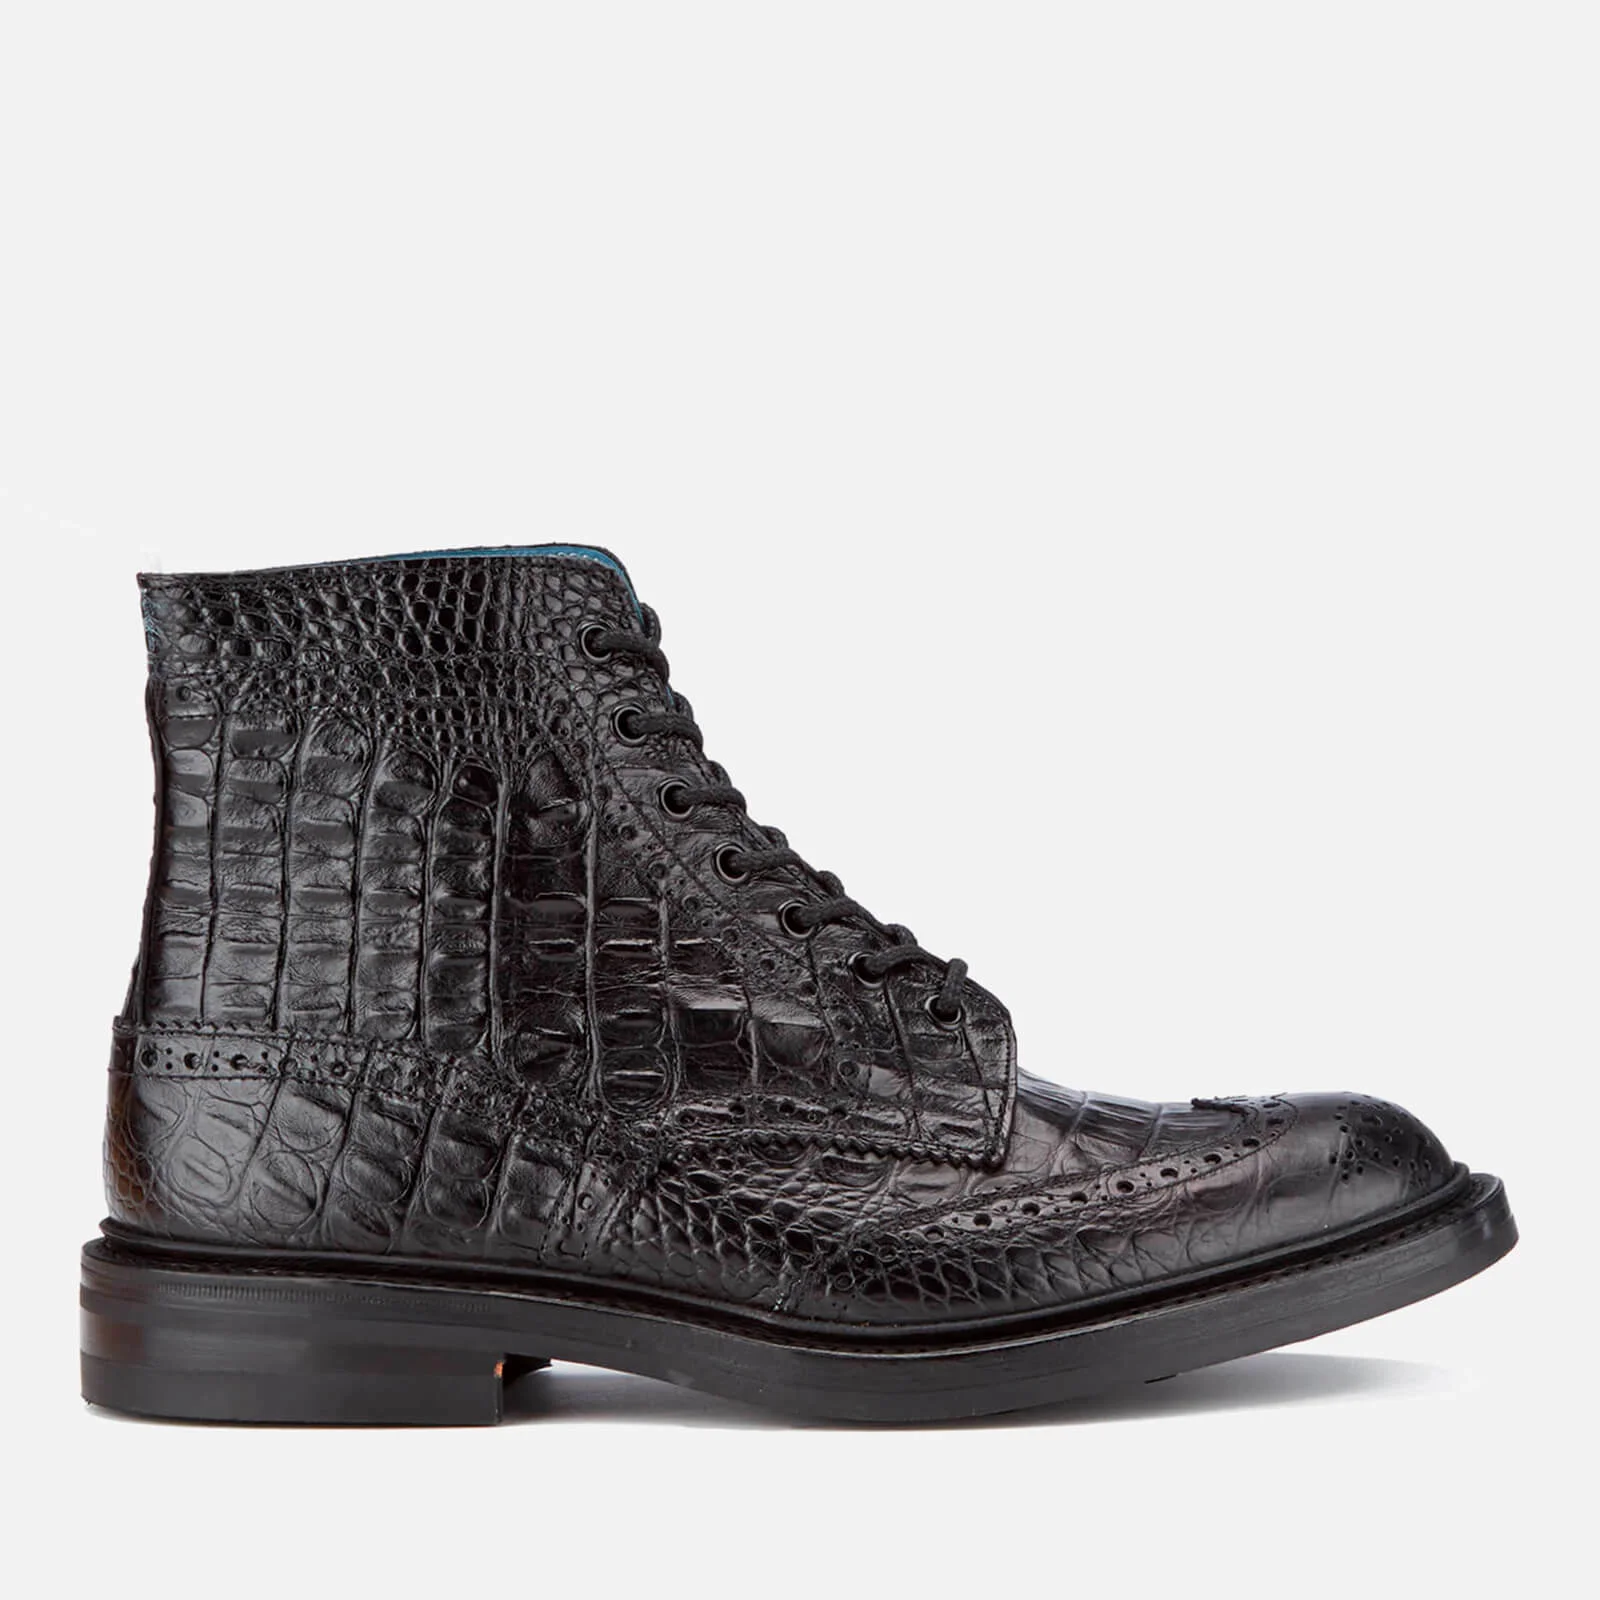 Tricker's Men's Stow Croc Leather Lace Up Brogue Boots - Black Image 1